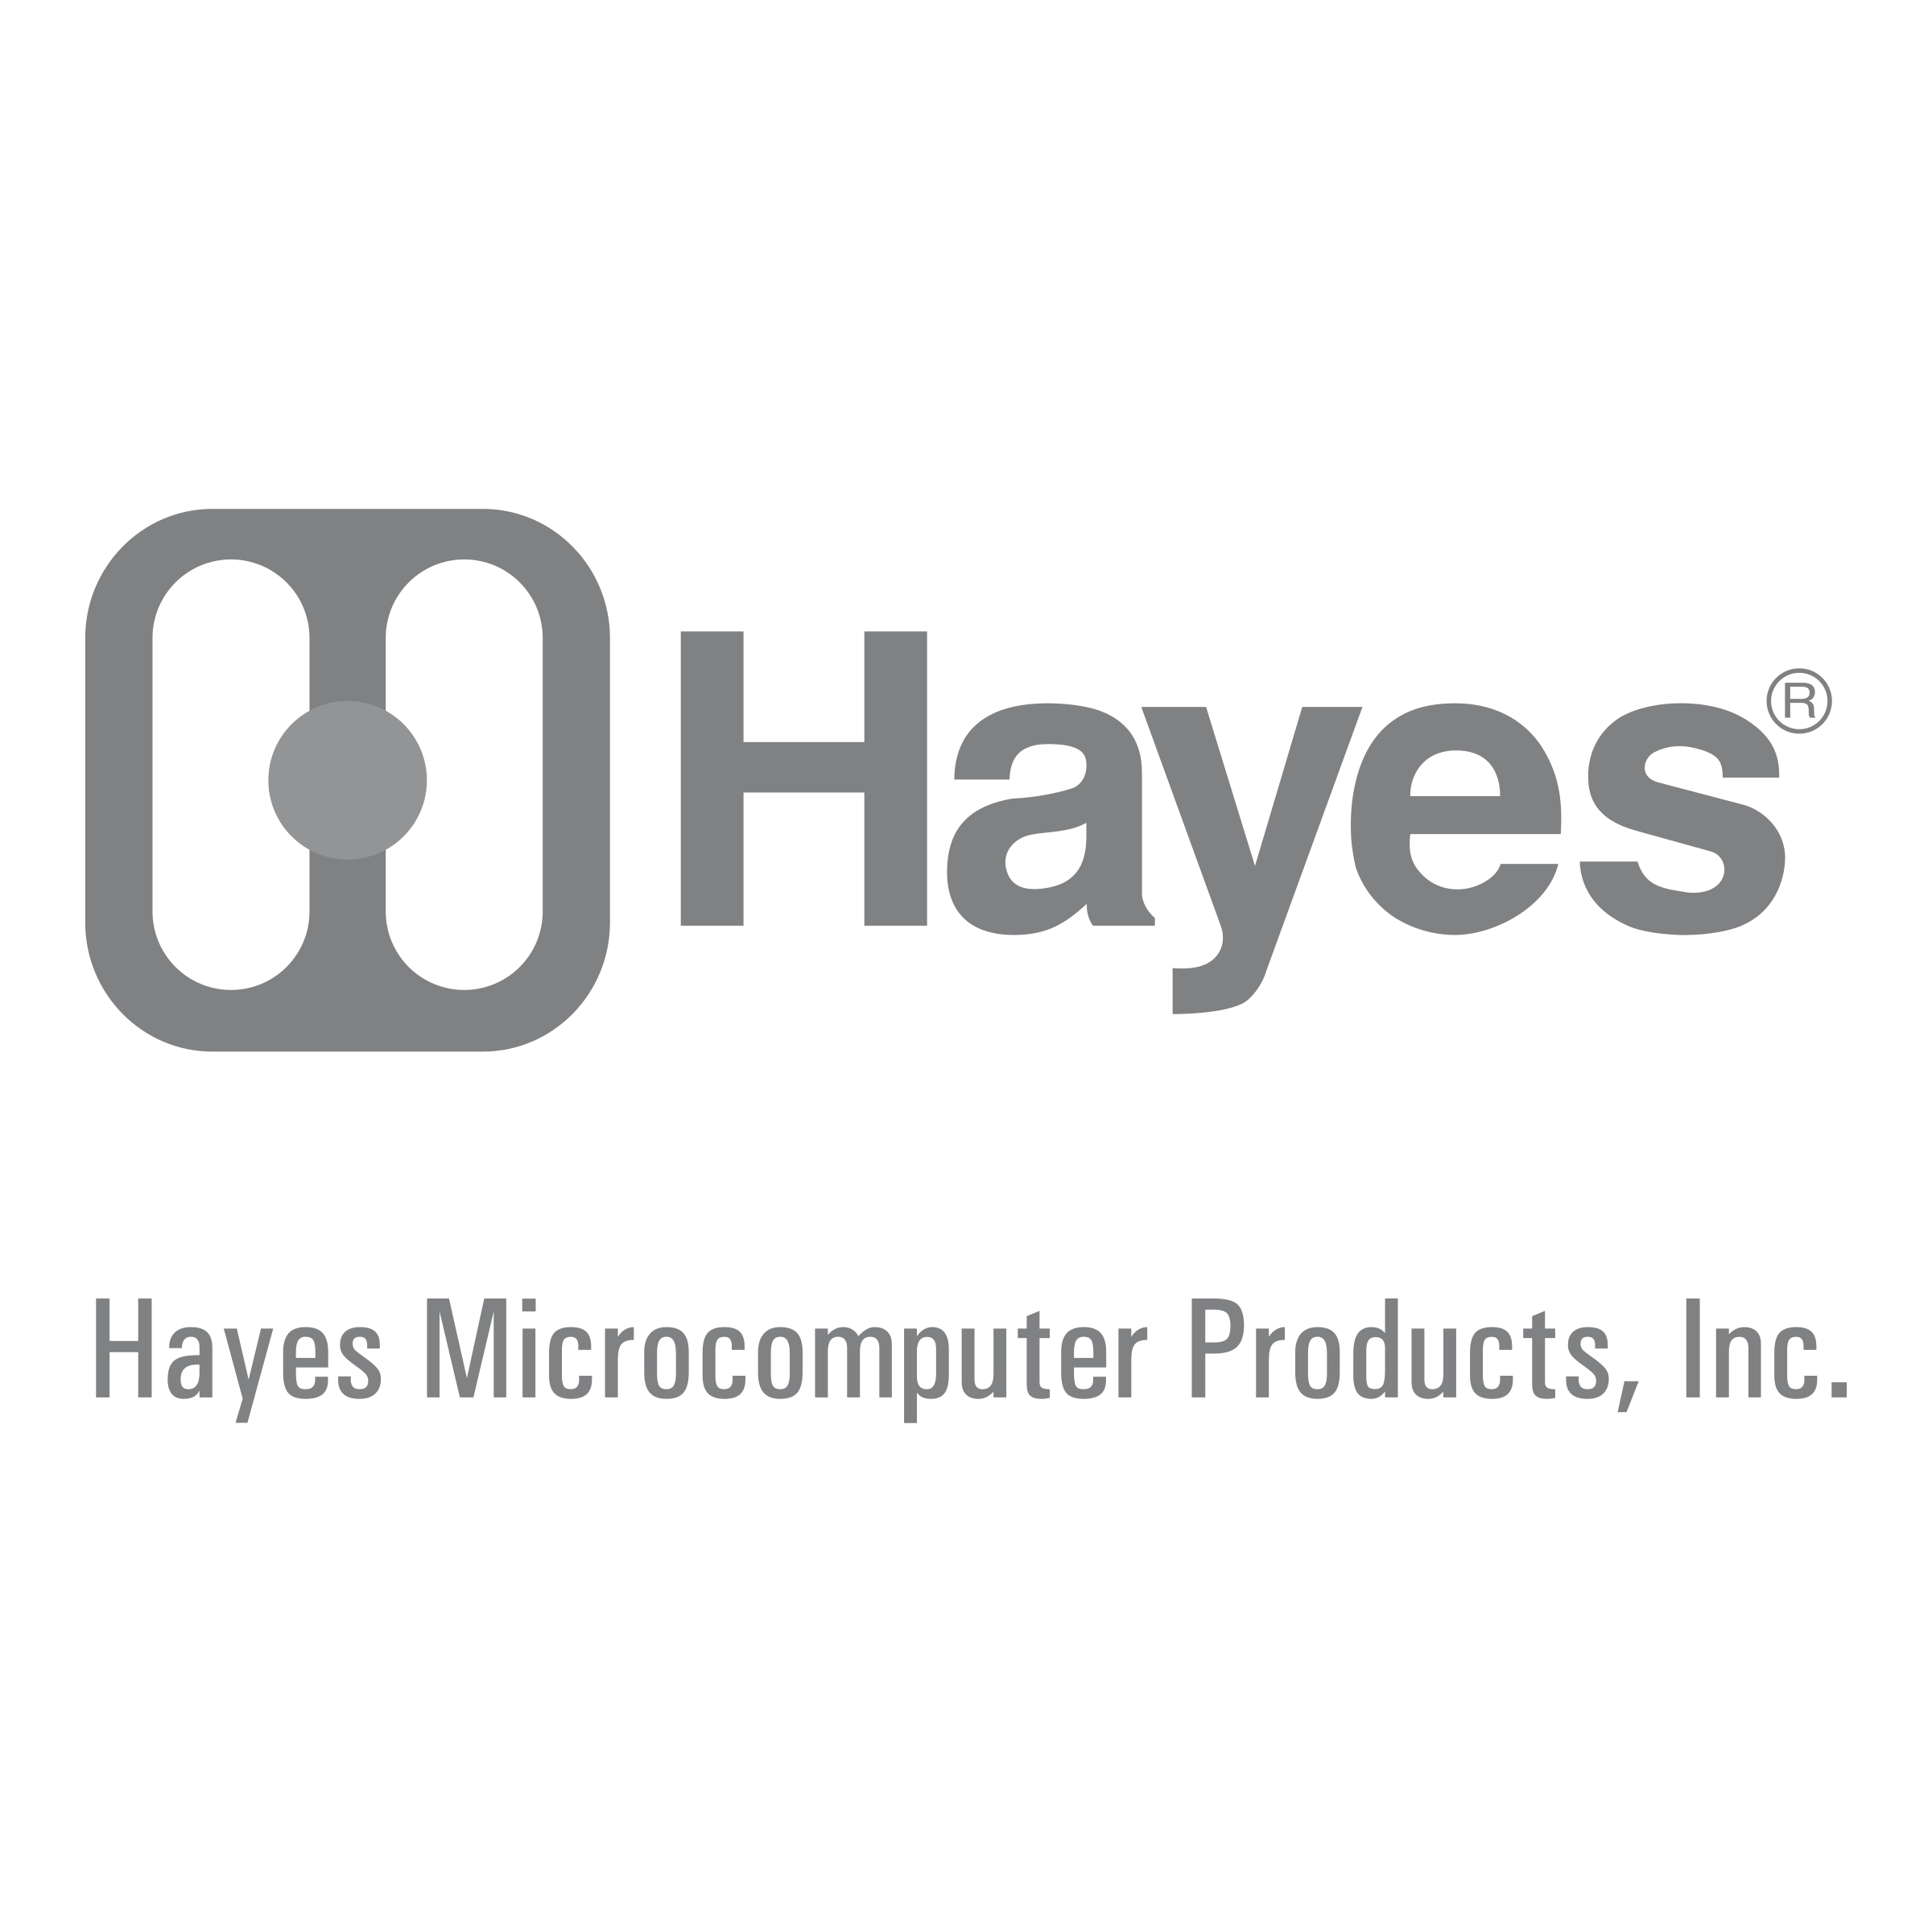 Hayes Logo - Hayes Logo PNG Transparent & SVG Vector - Freebie Supply